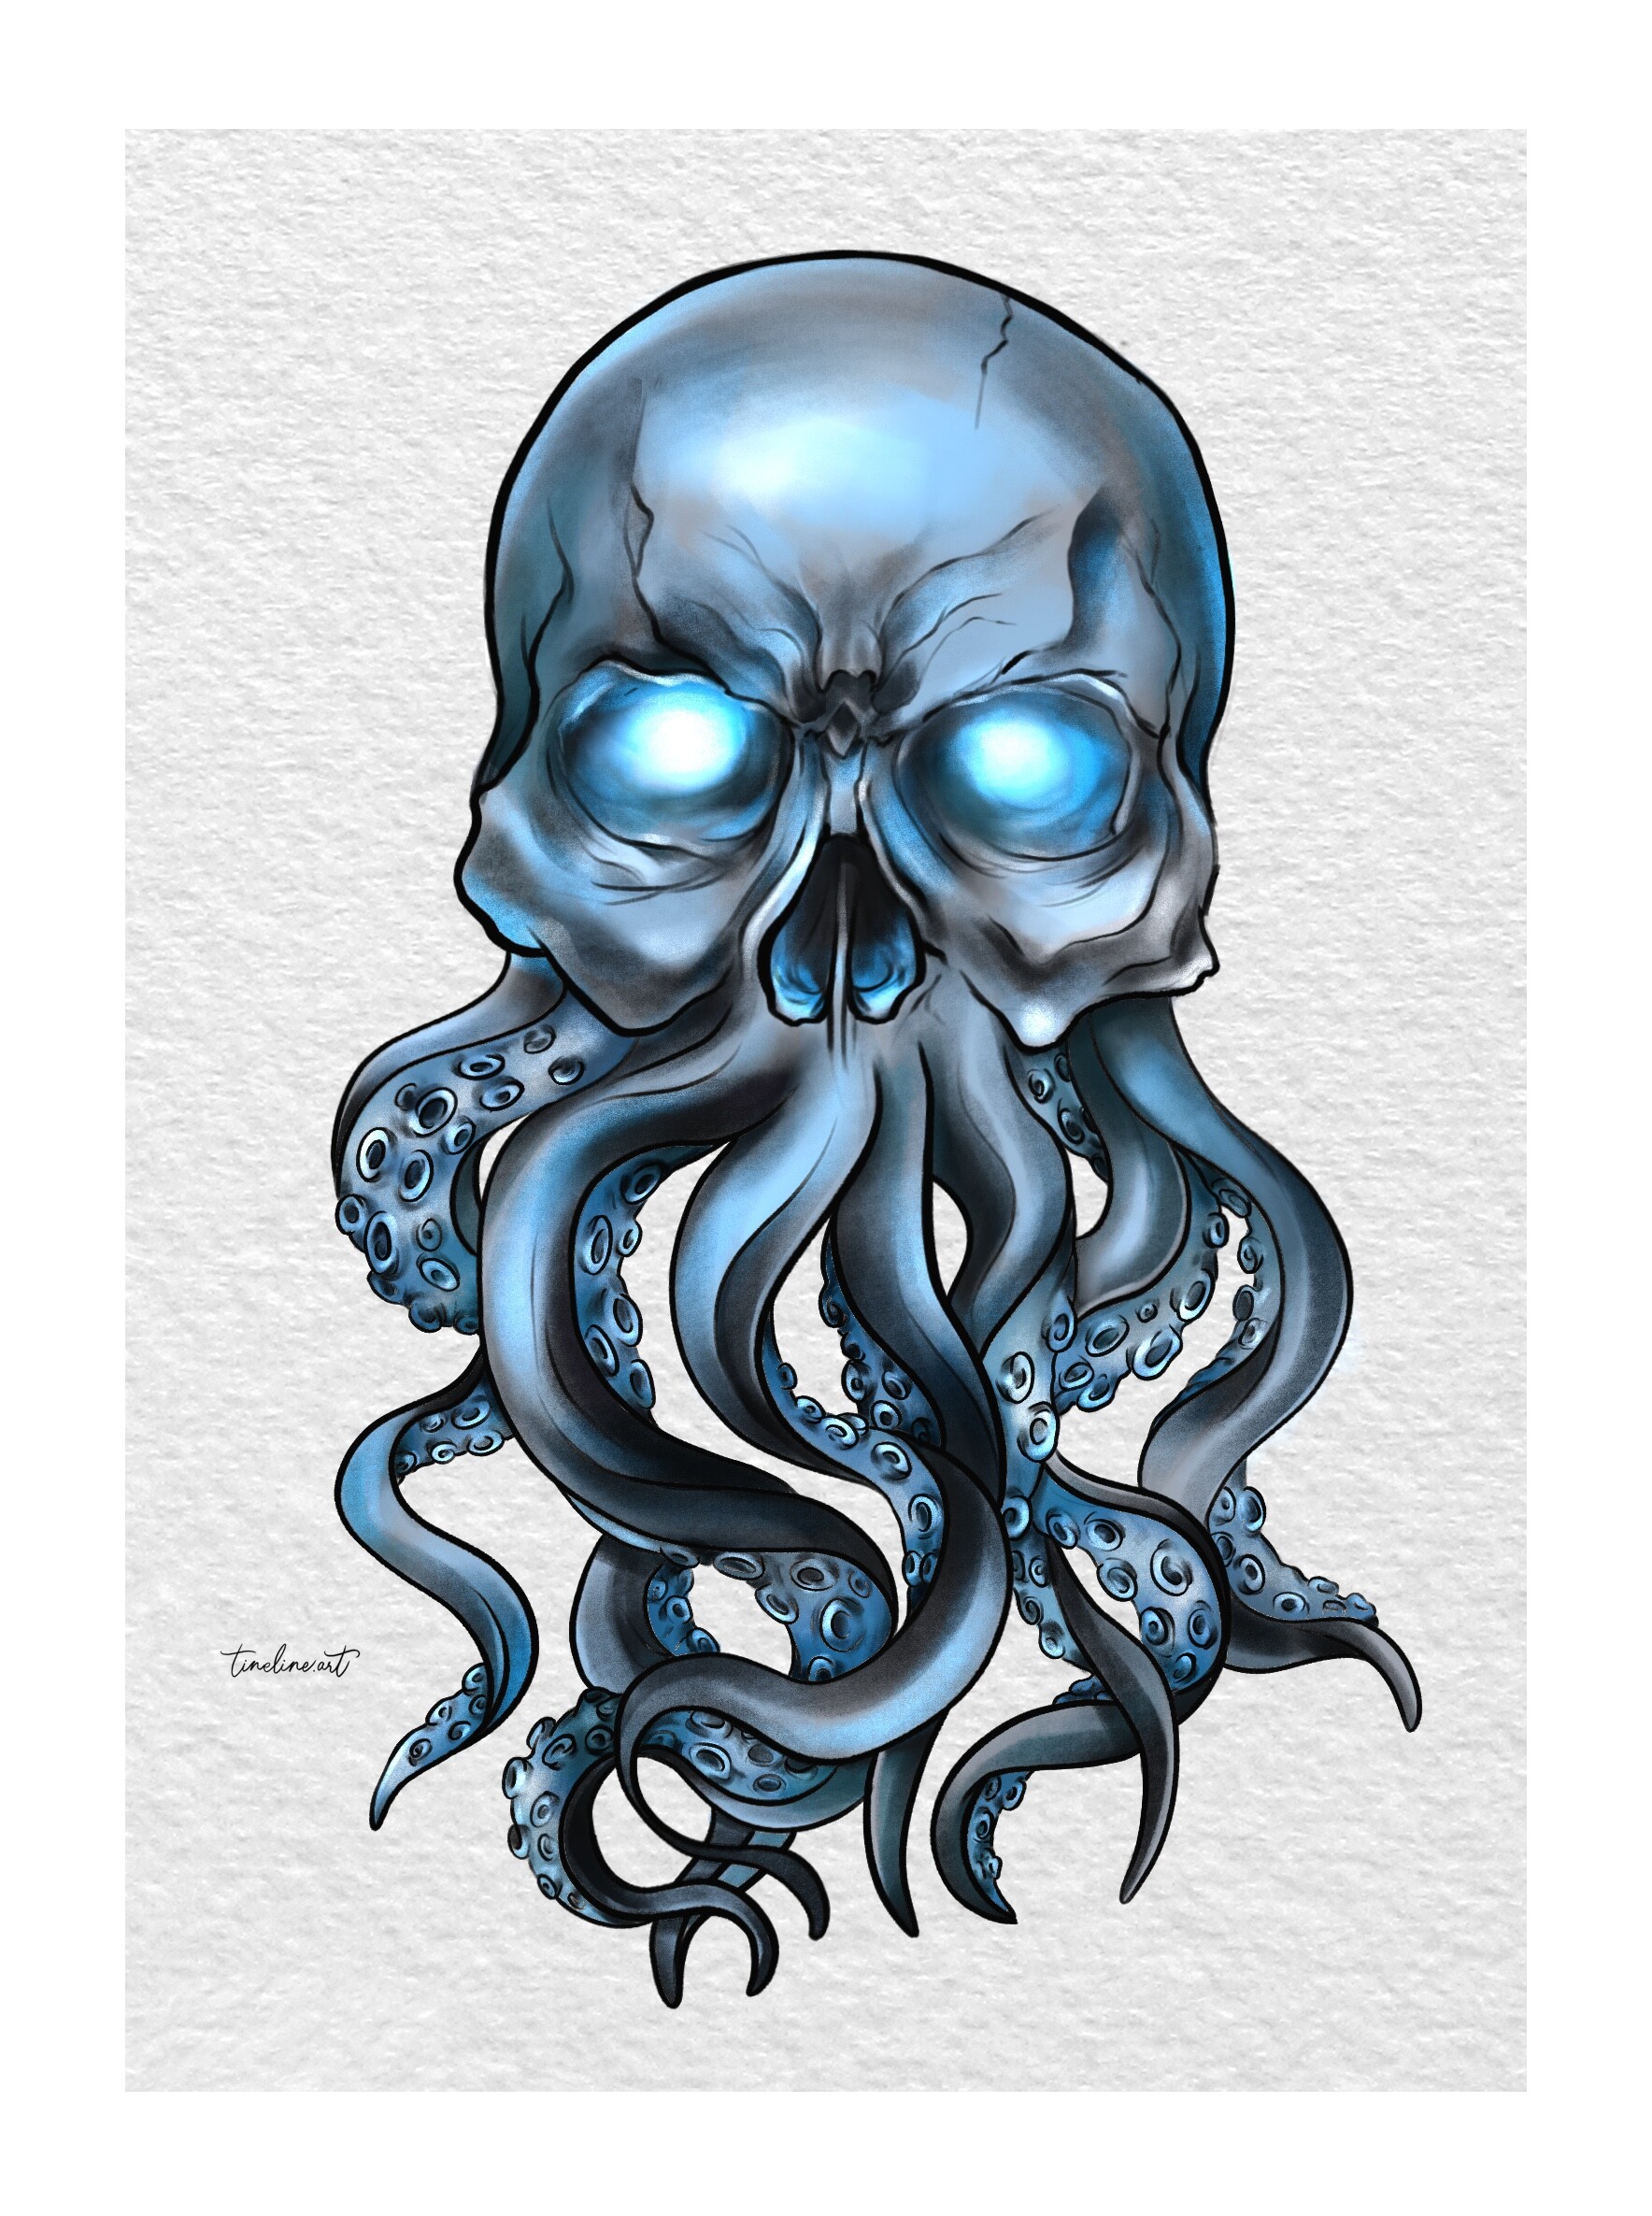 Tattoo kraken by Wendrock on DeviantArt